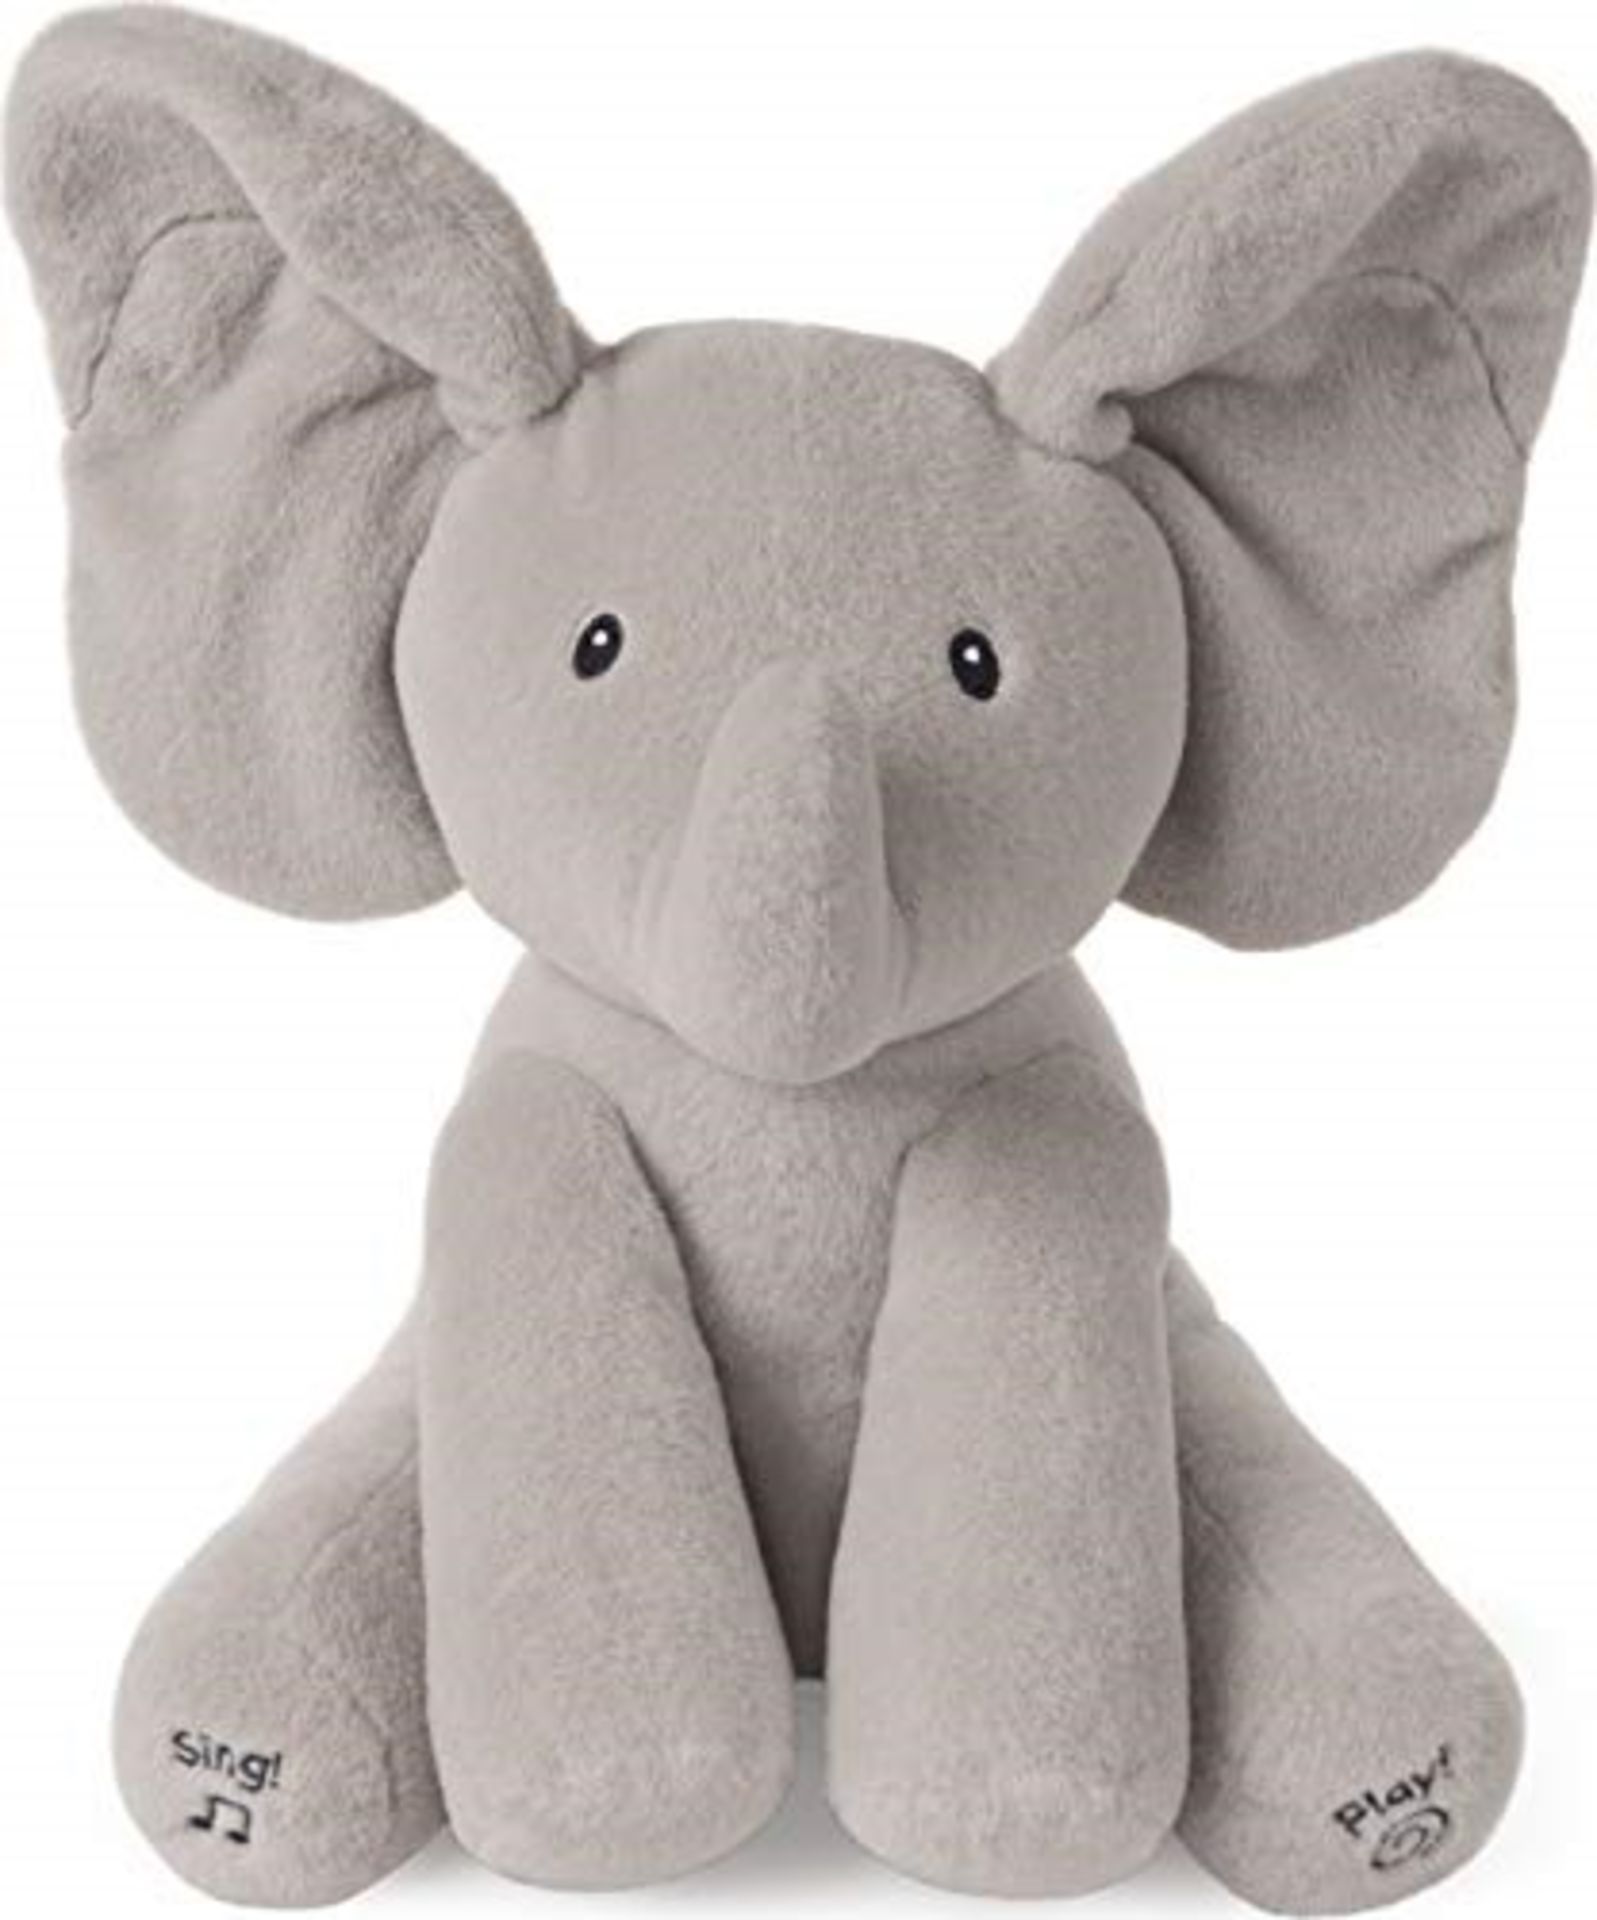 GUND Animated Flappy the Elephant Stuffed Animal Plush, Grey, 12"